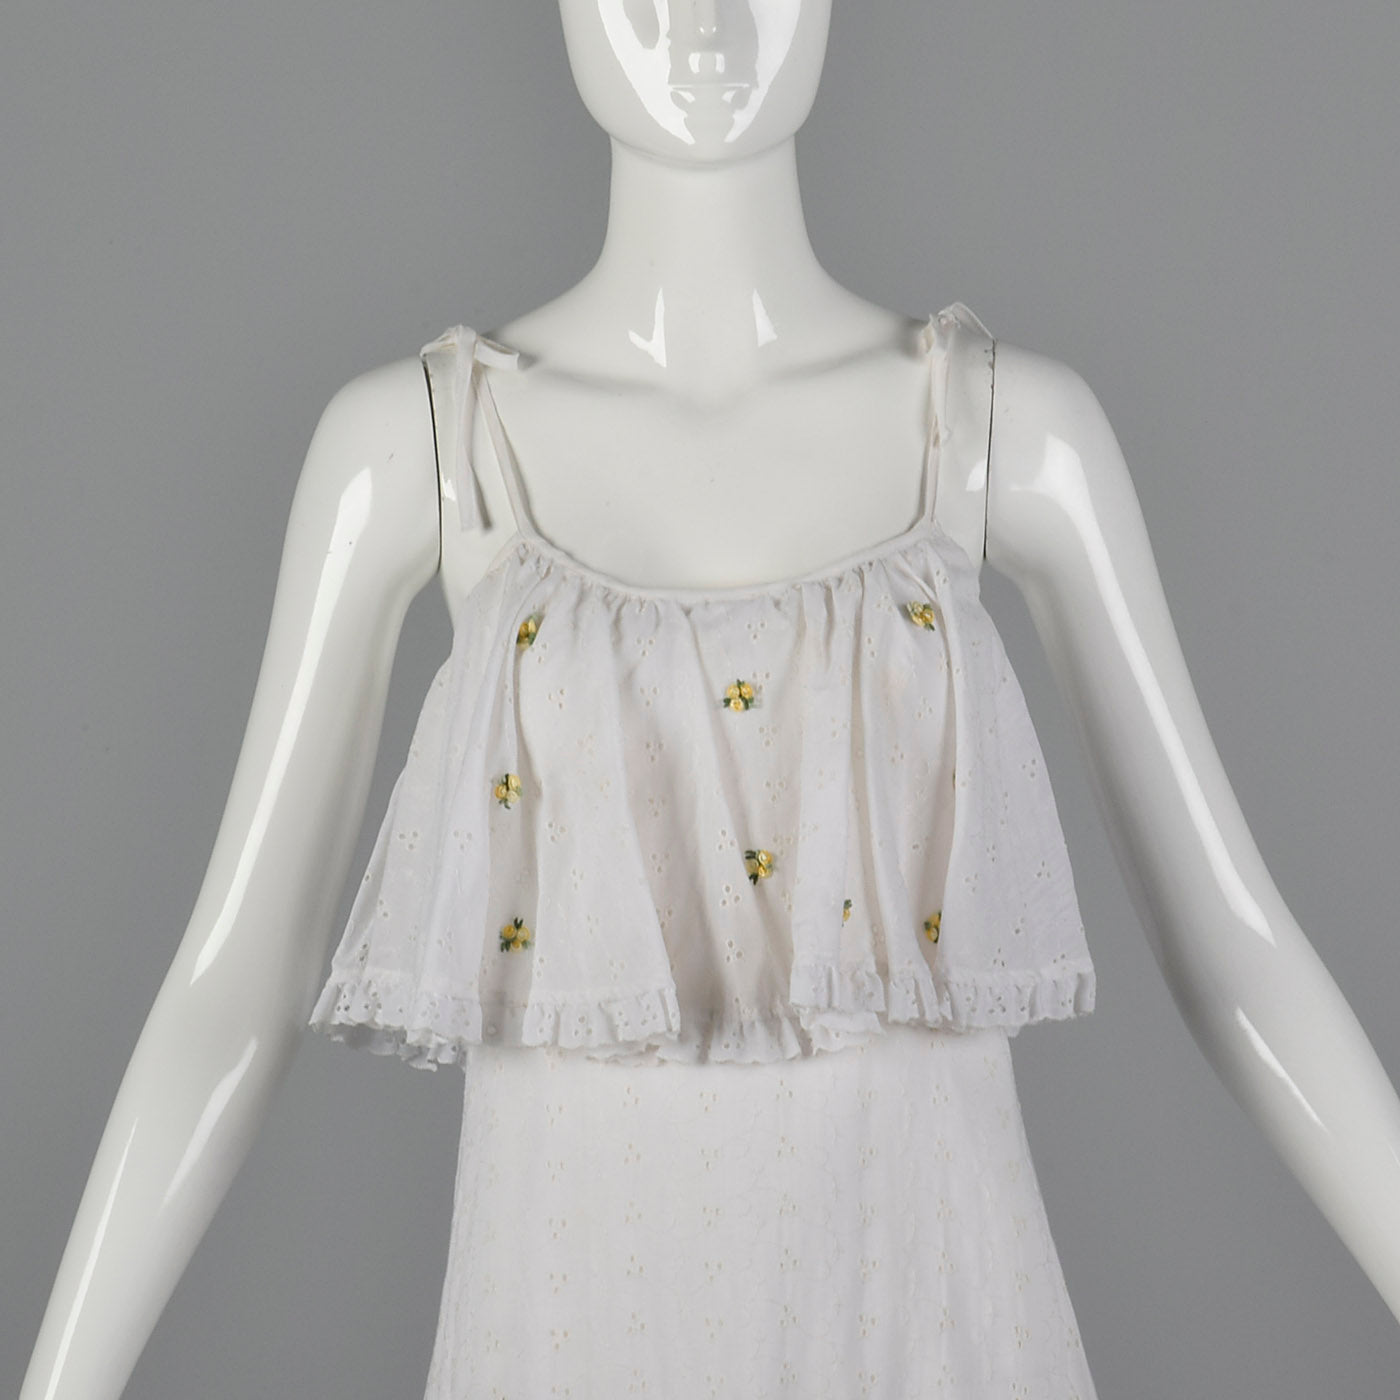 1970s White Eyelet Dress